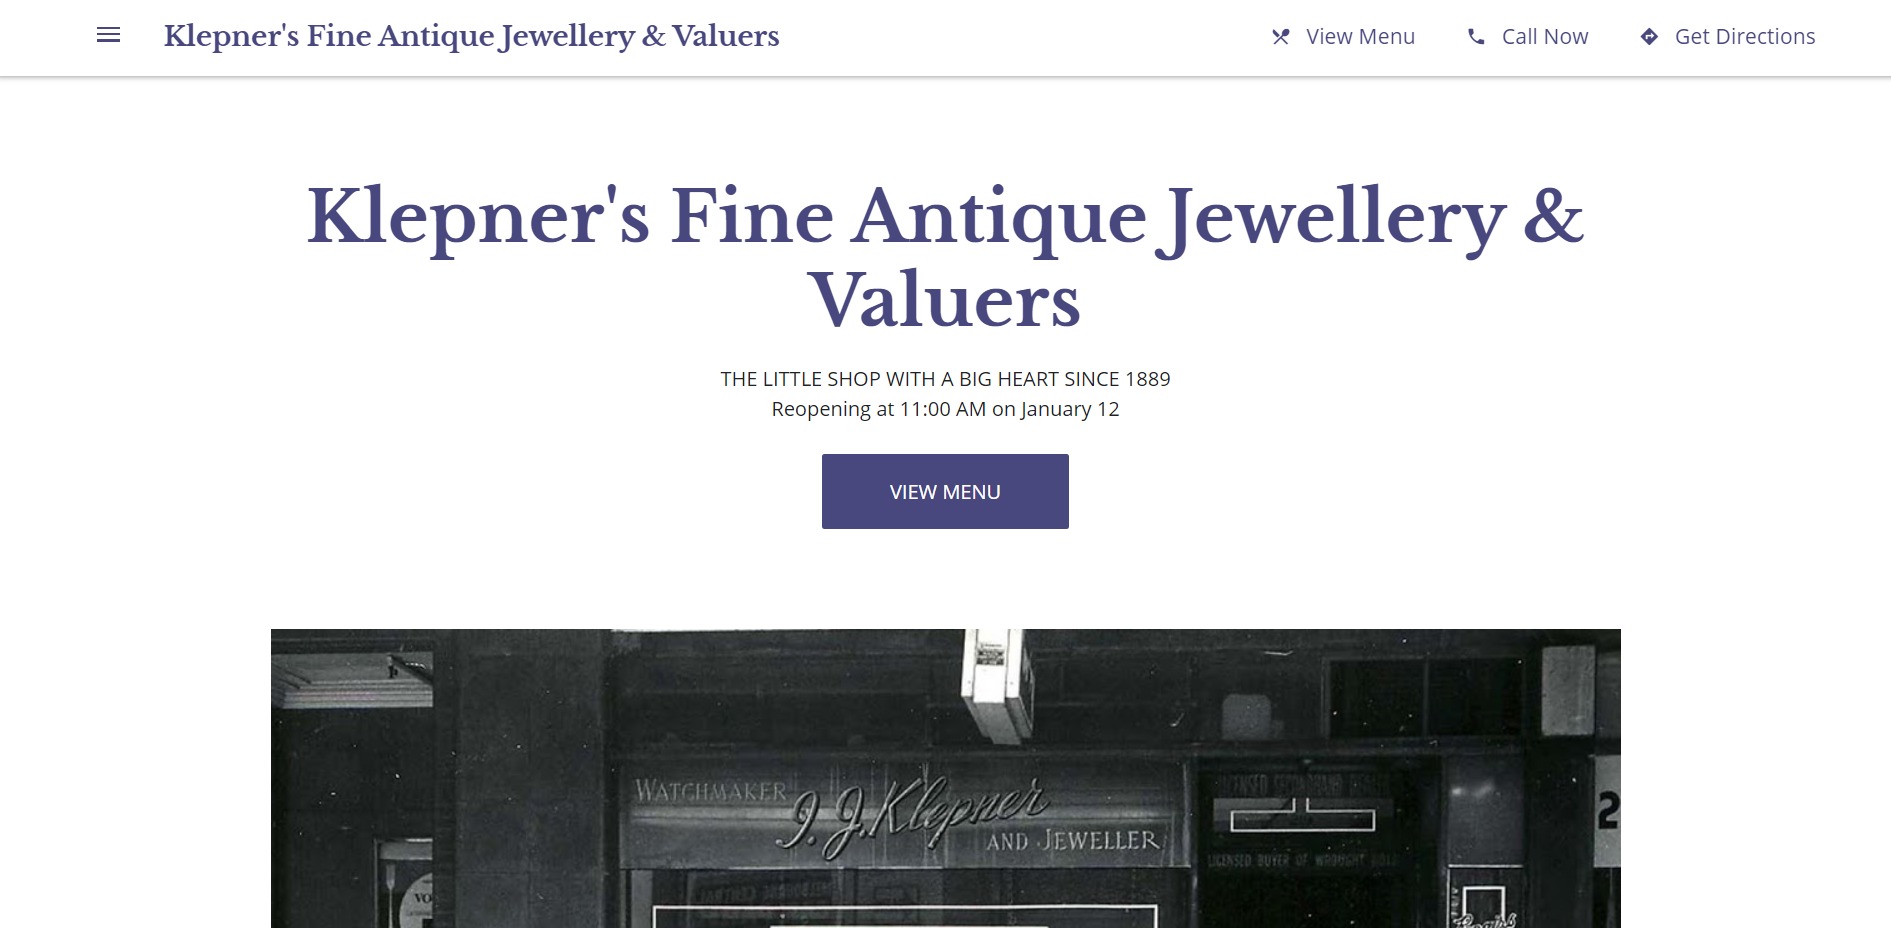 Klepner's Fine Antique Jewellery & Valuers